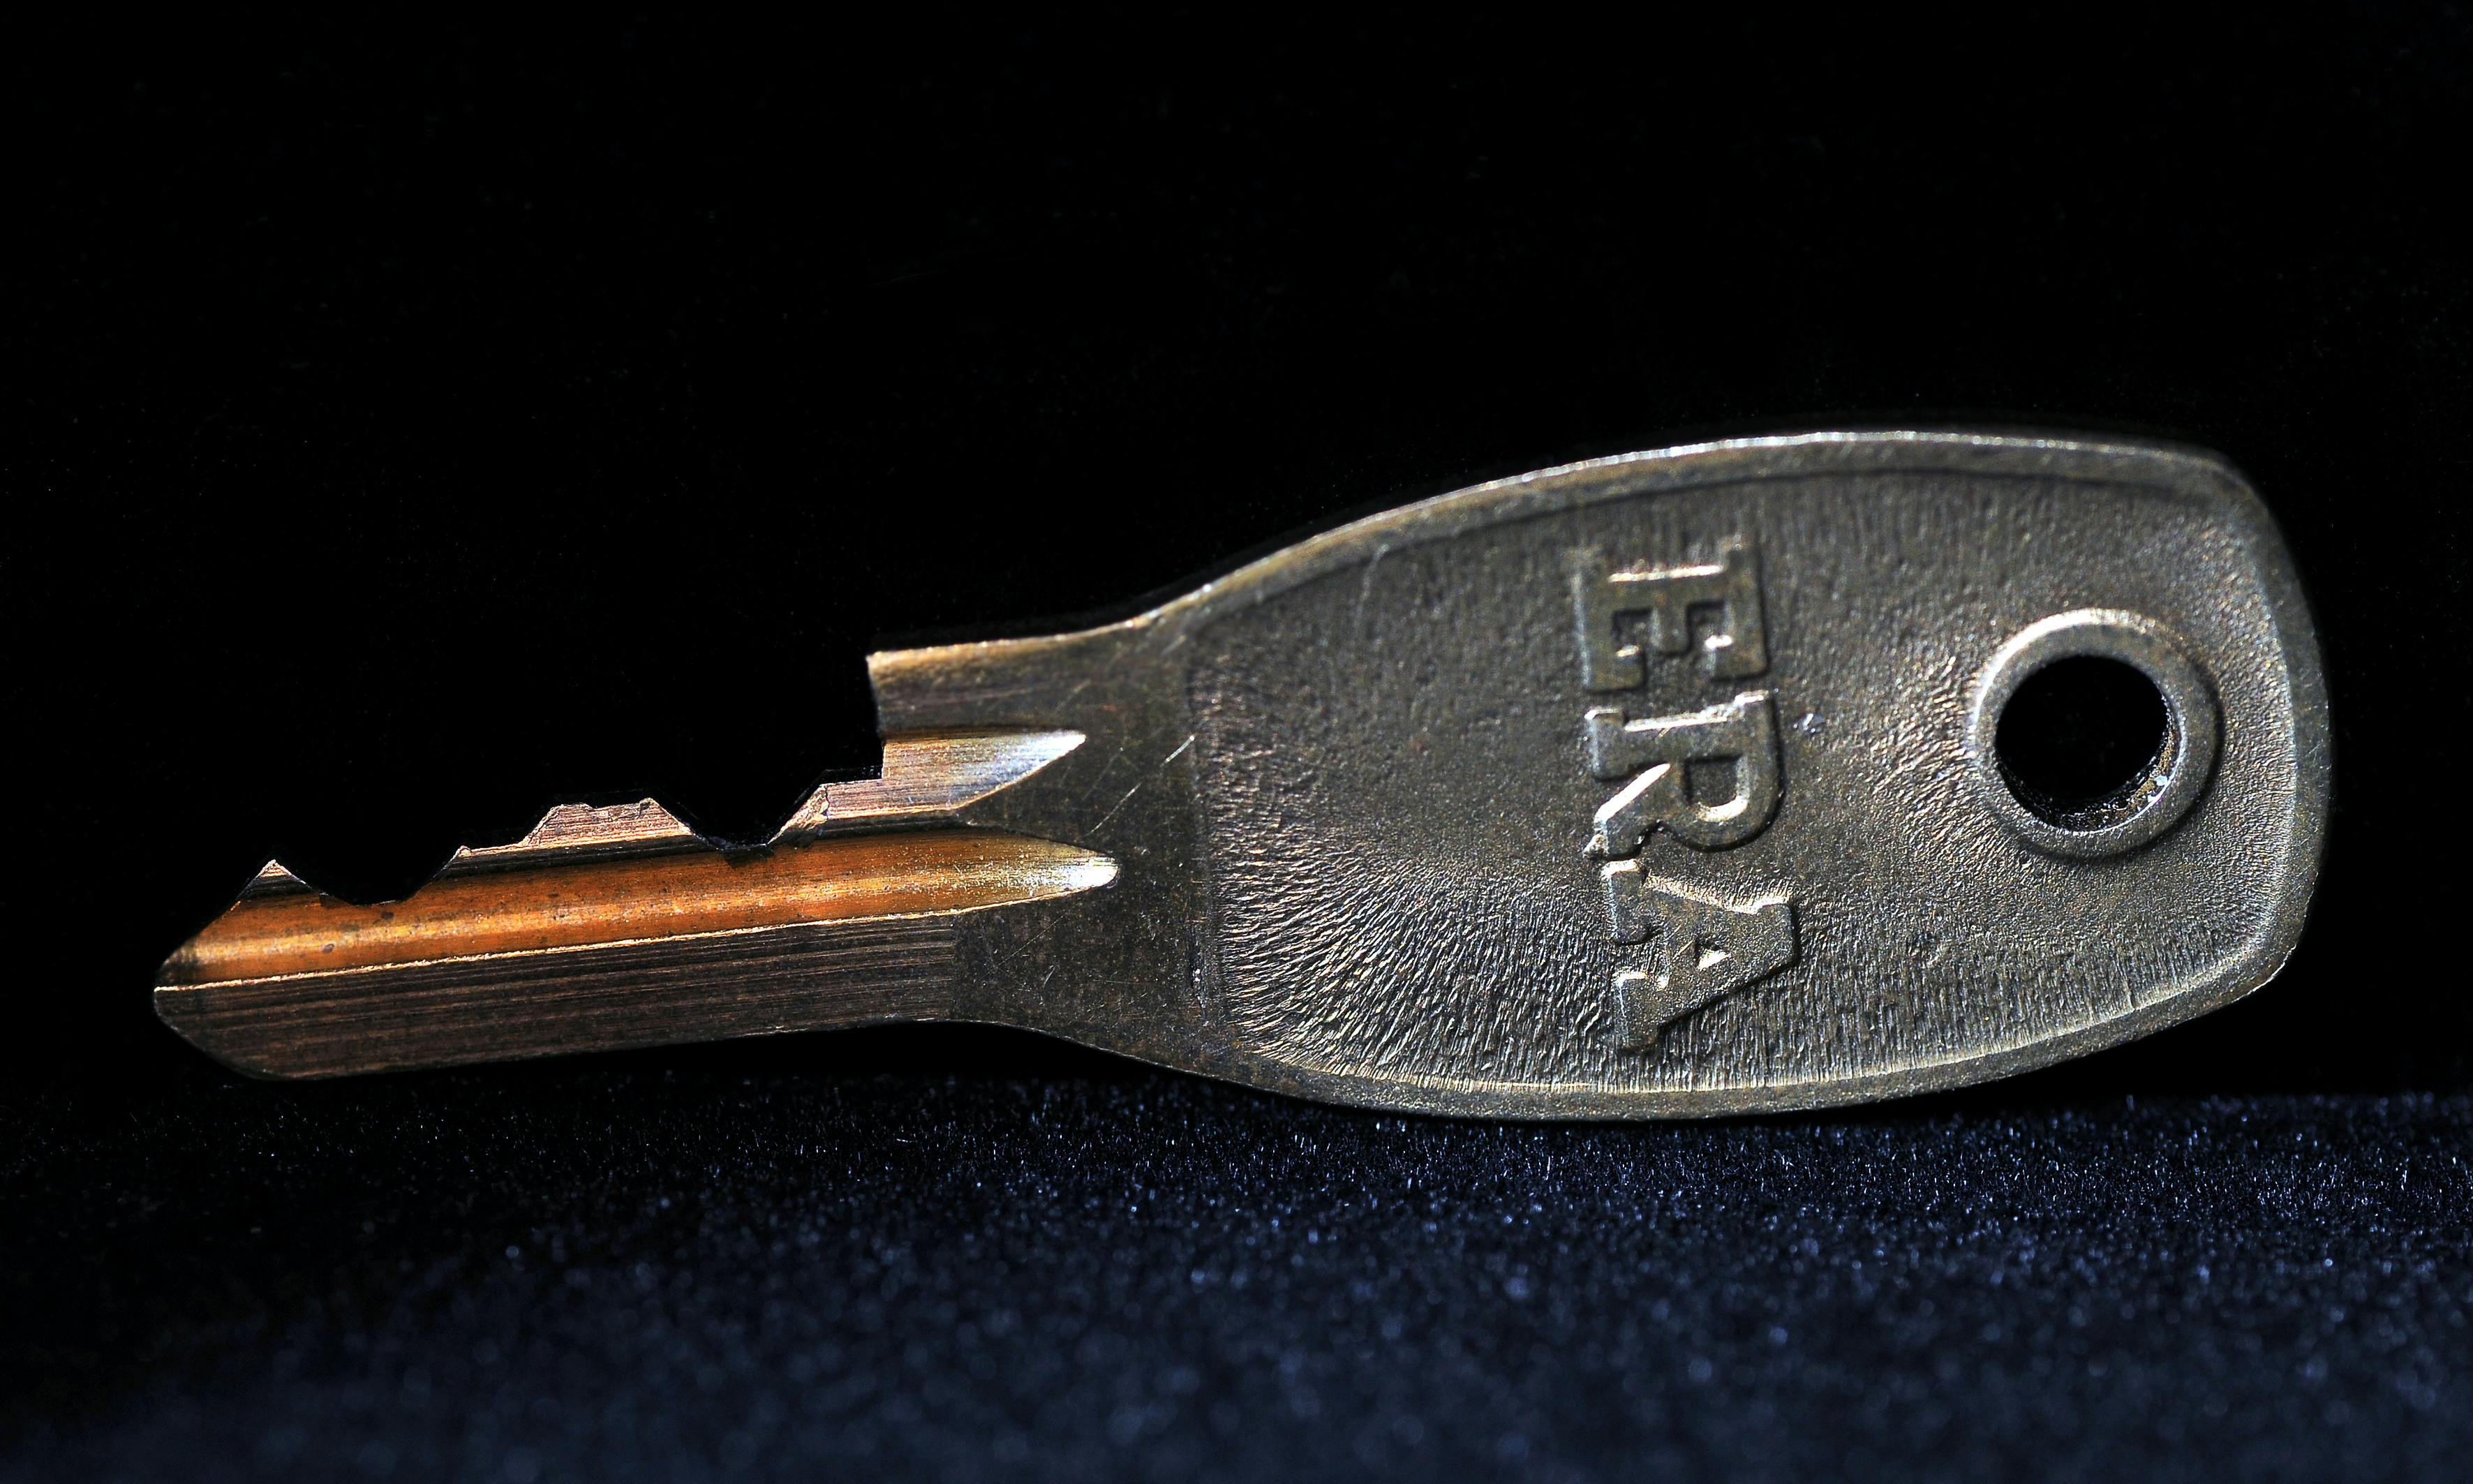 Free stock photo of Macro shot of a small window key